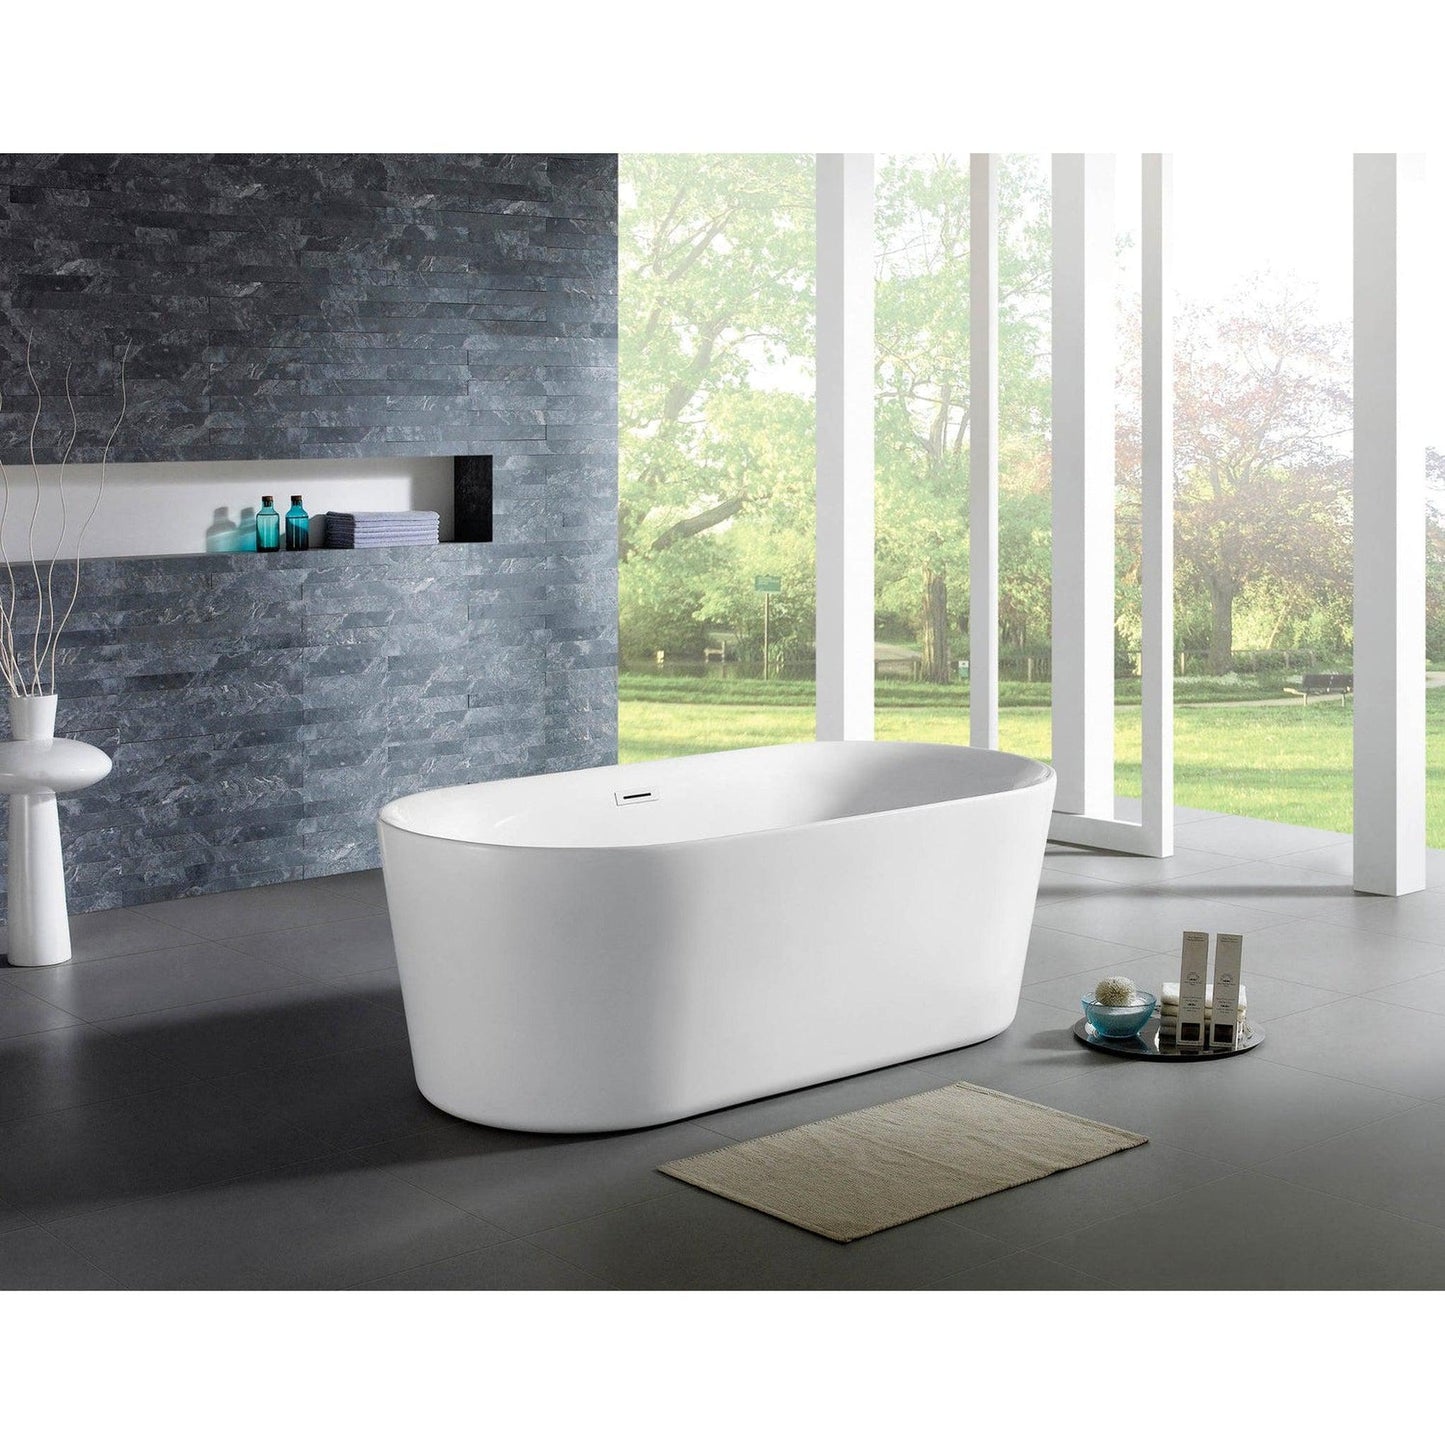 Eviva Tiffany 67" x 32" White Freestanding Rectangular Acrylic Soaking Bathtub